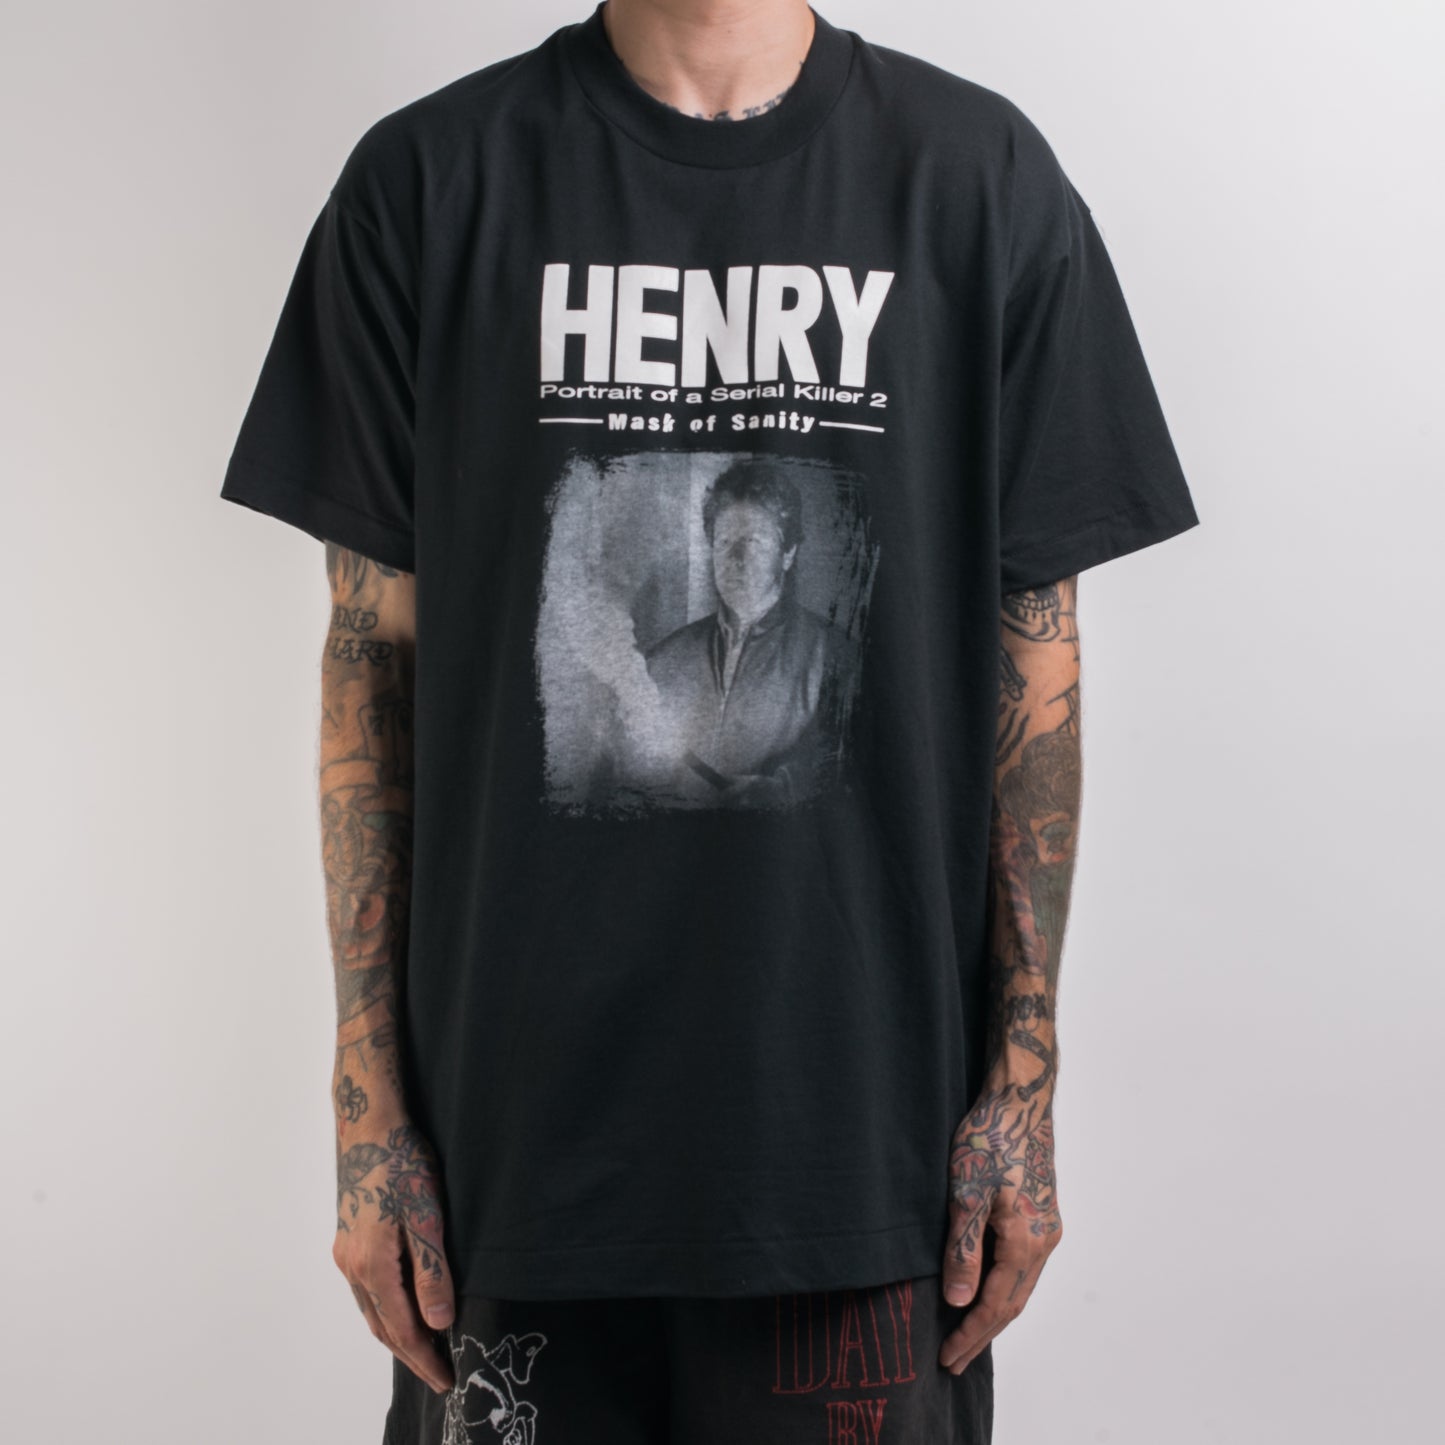 Vintage 90’s Henry Portrait Of A Serial Killer 2 Movie Promo T-Shirt